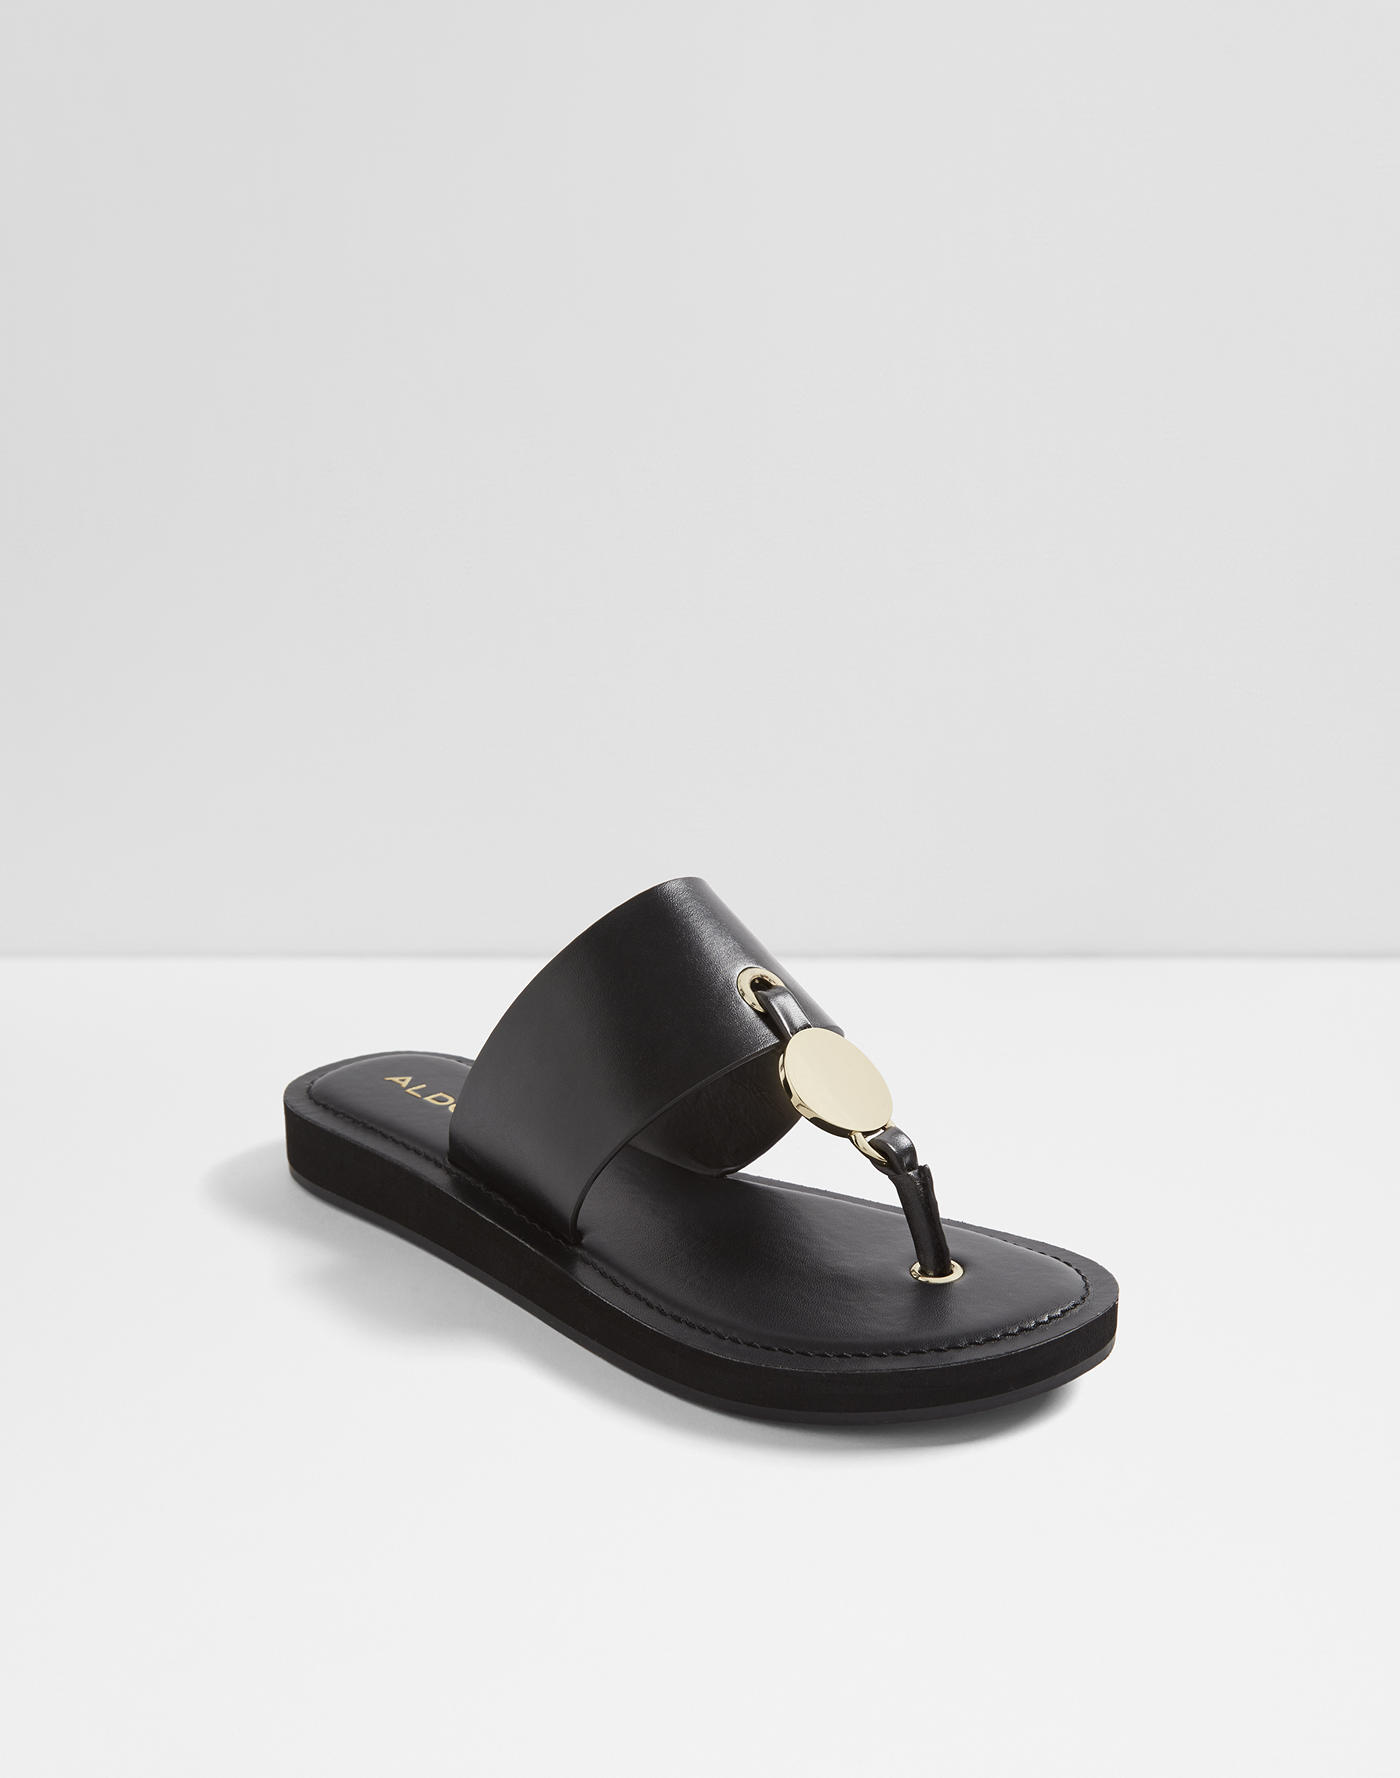 Flat-out fabulous sandals | ALDO Canada